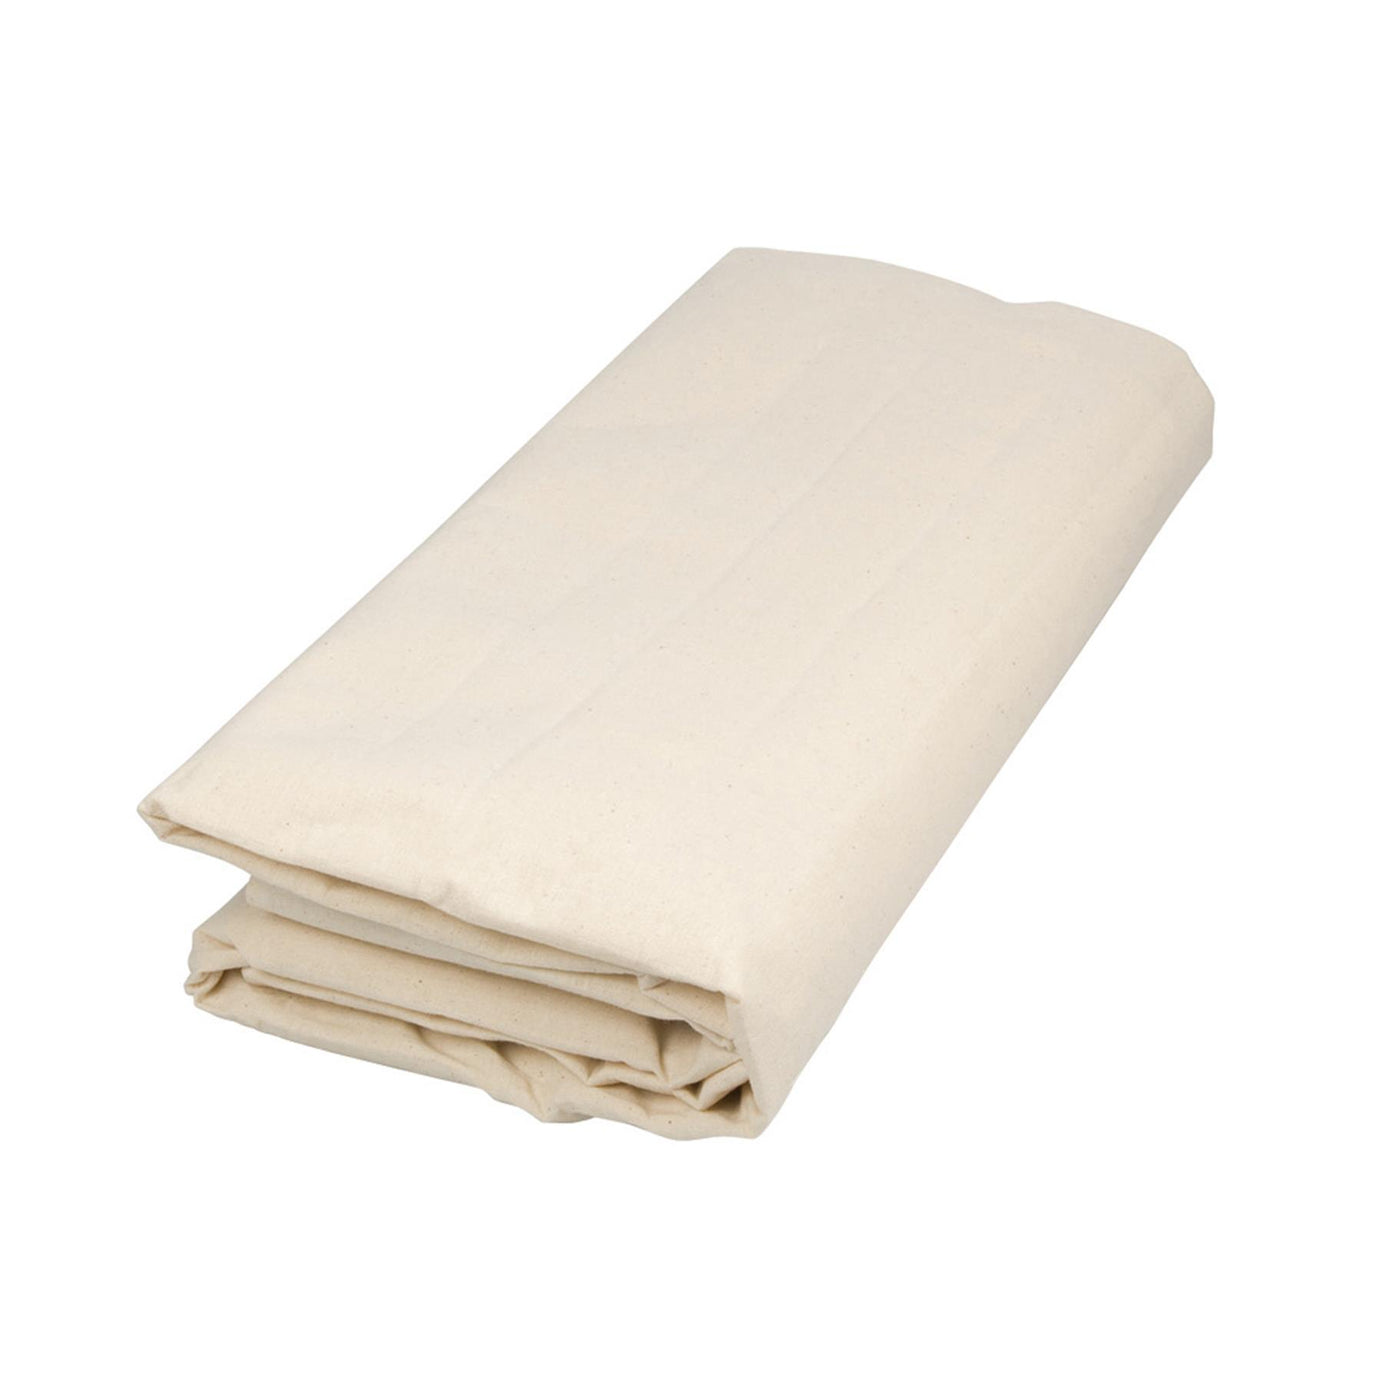 Dust Sheet Premium Coated 3.4 X 2.4M 100% Close-Weave Cotton & Plastic Backing